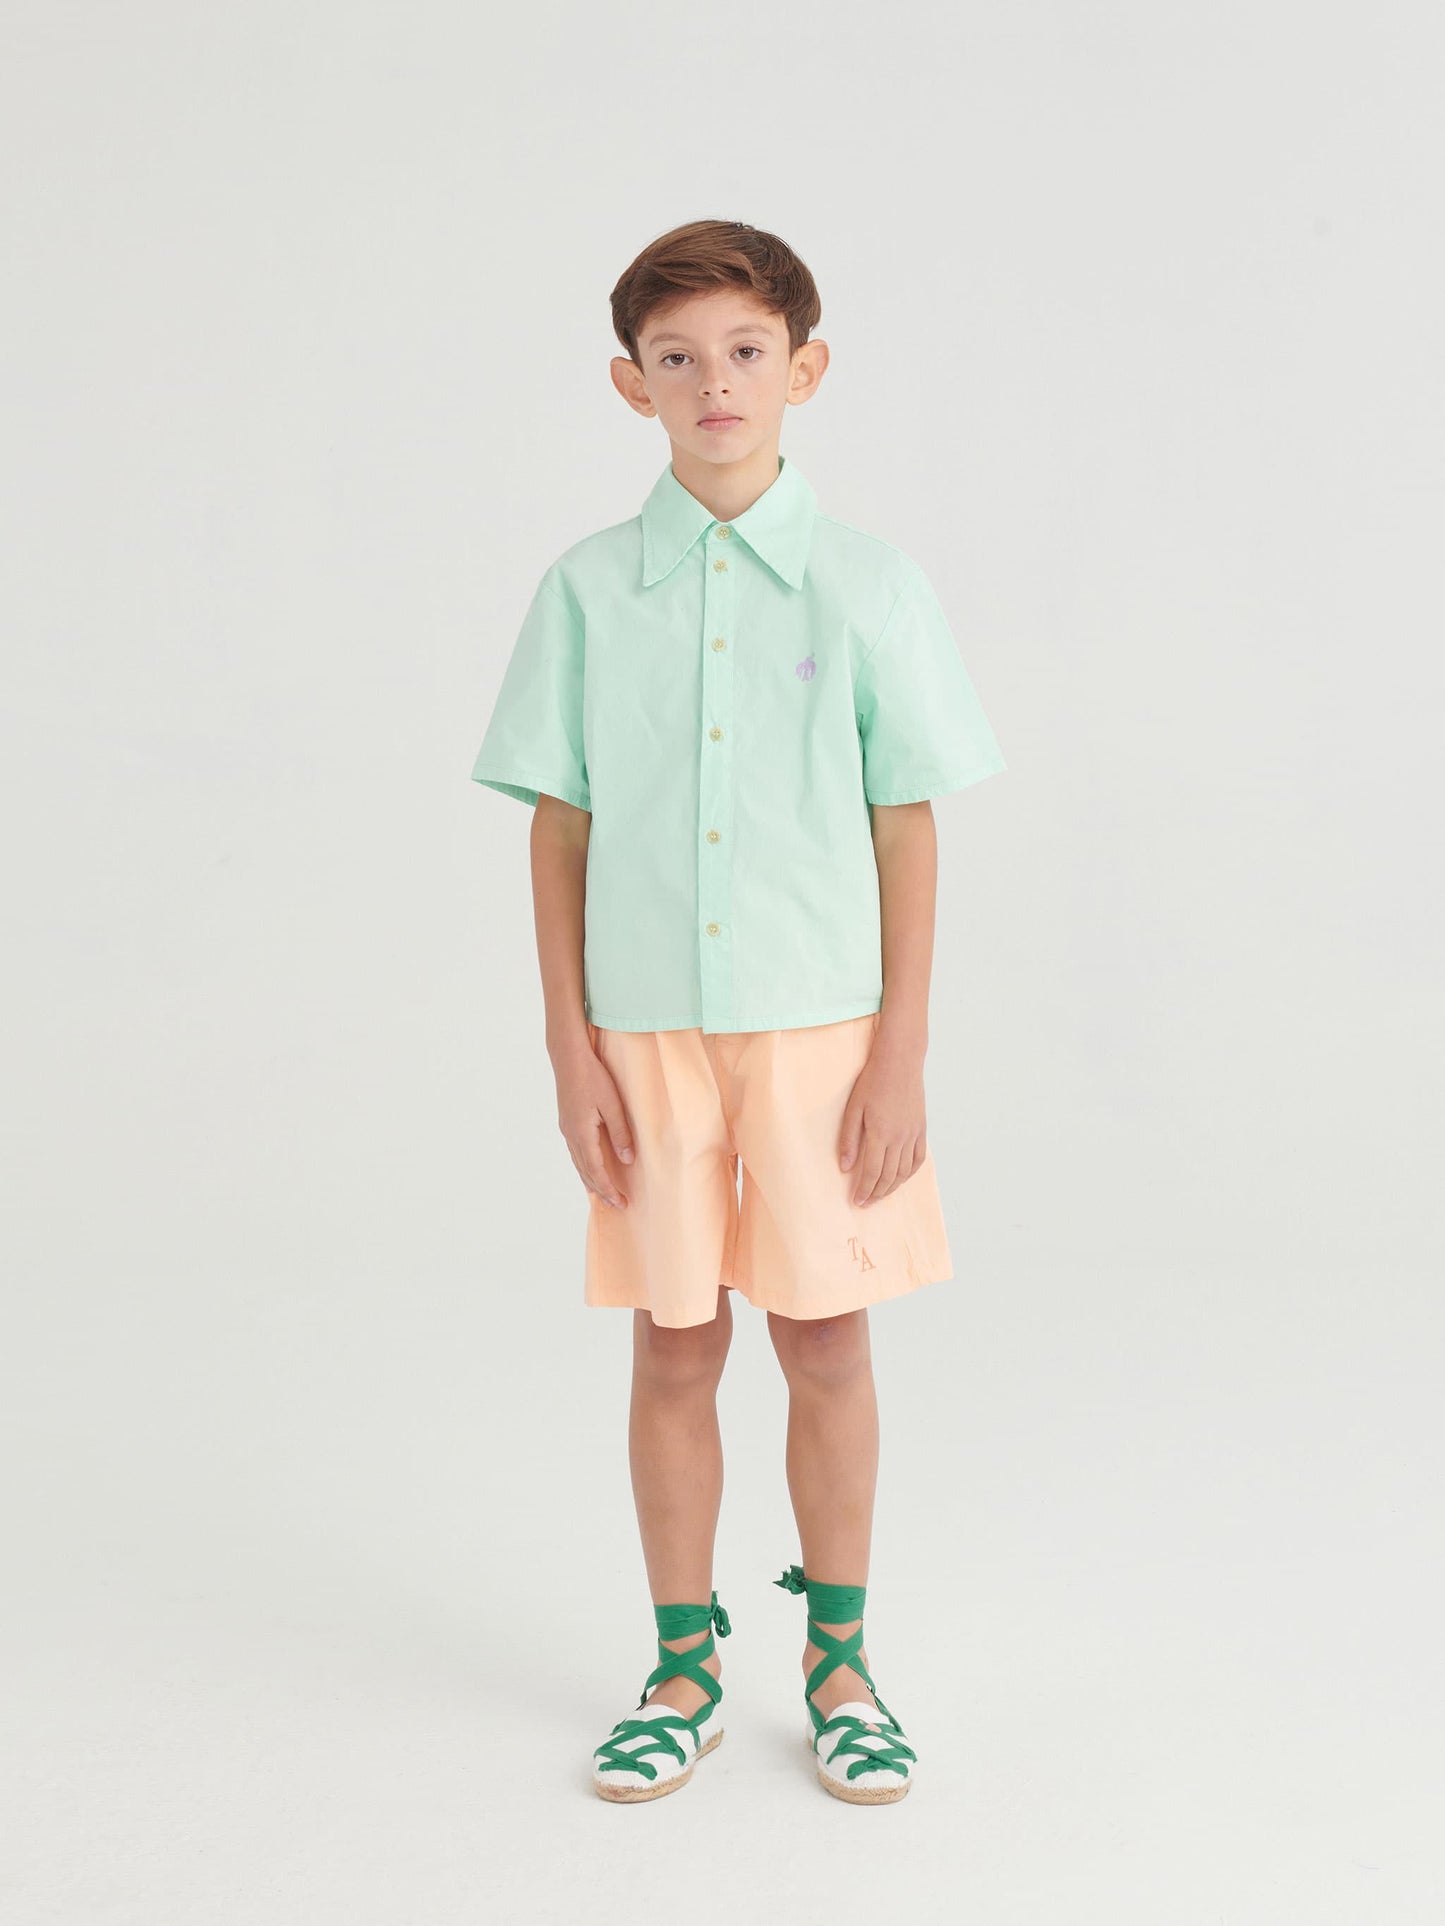 Buttoned Shirt nº02 Aqua Green